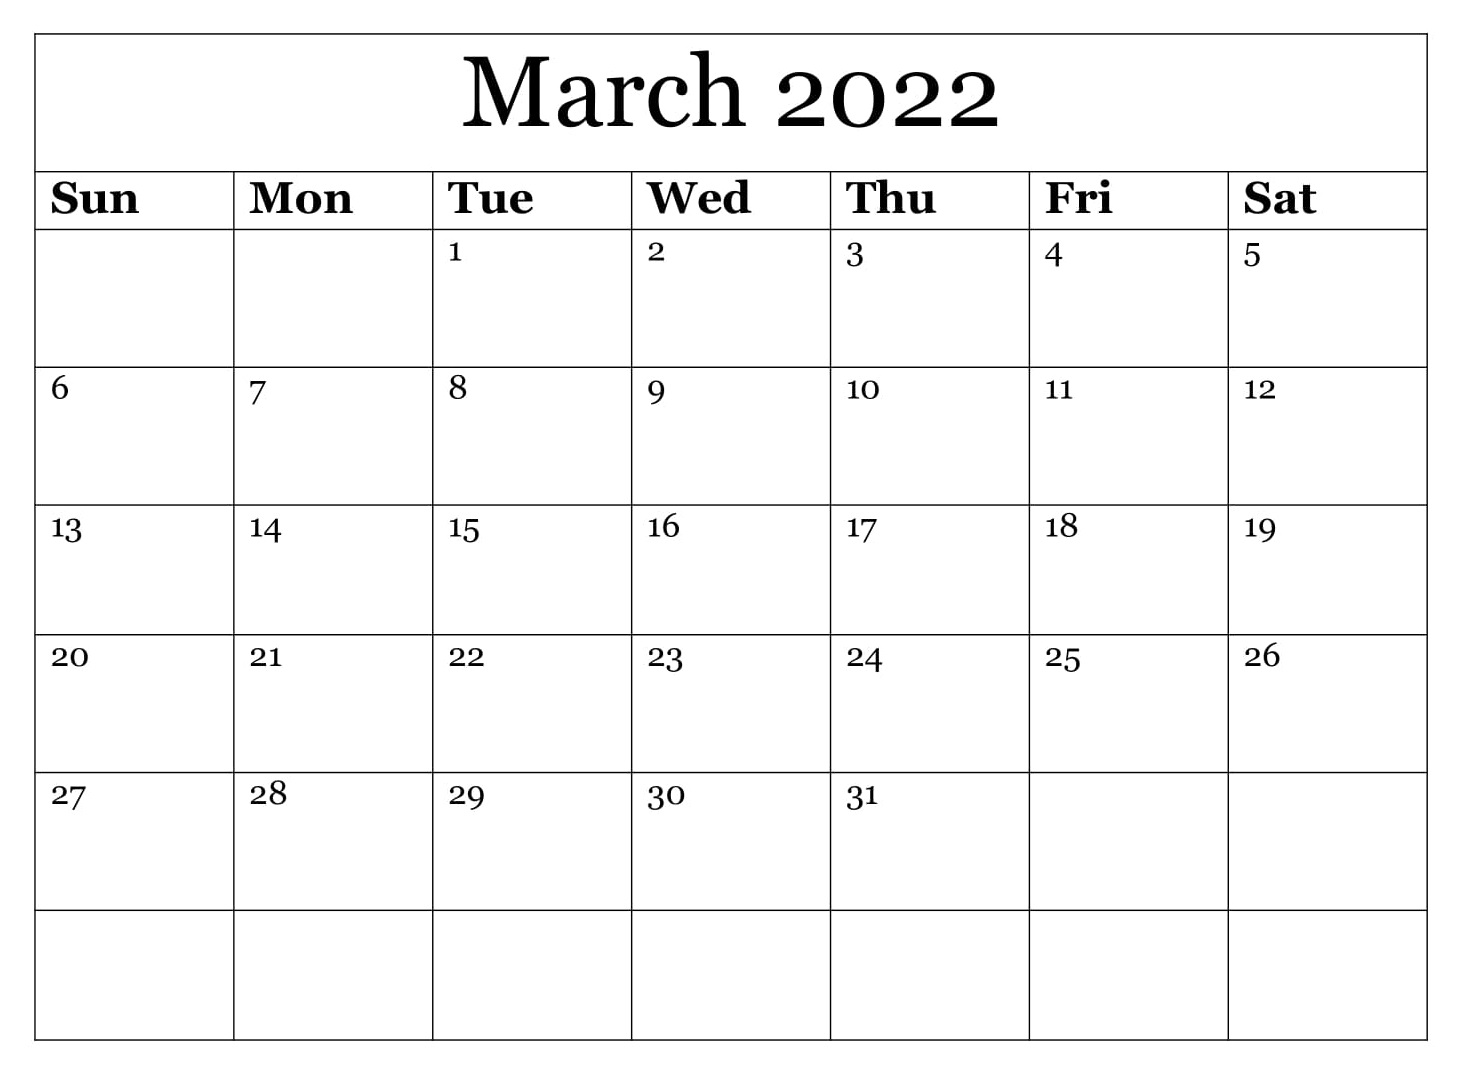 March 2022 Excel Calendar Template